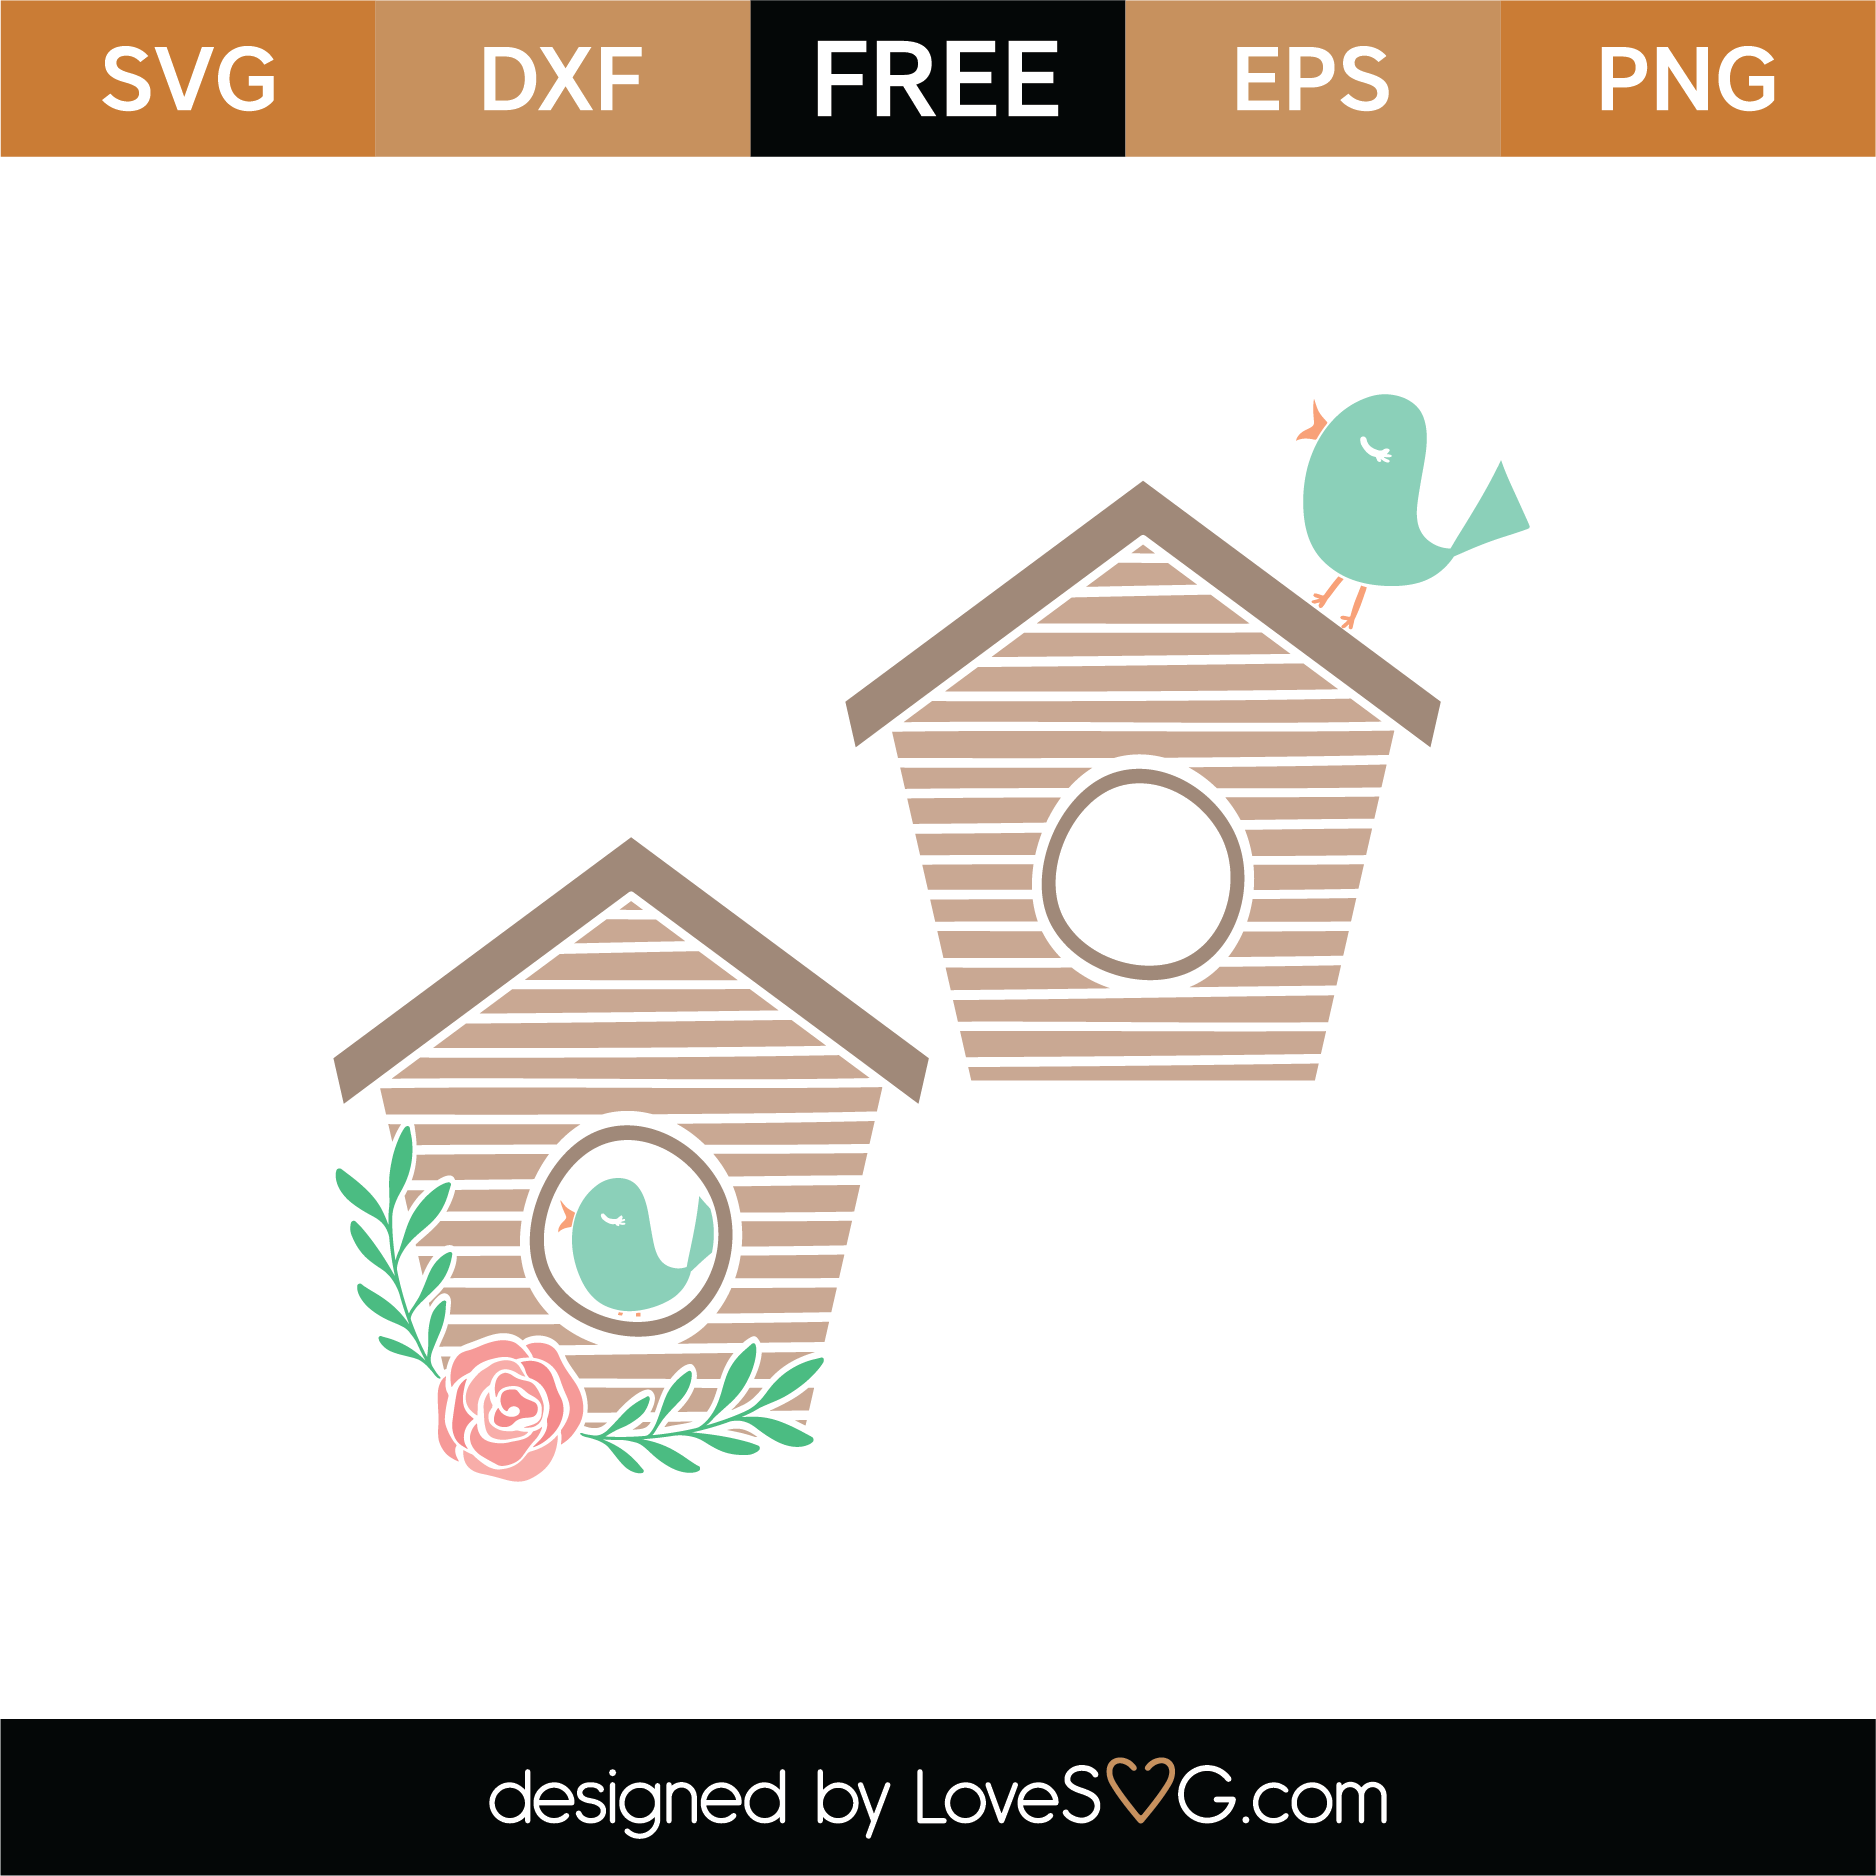 Download Free Birdhouse SVG Cut File | Lovesvg.com